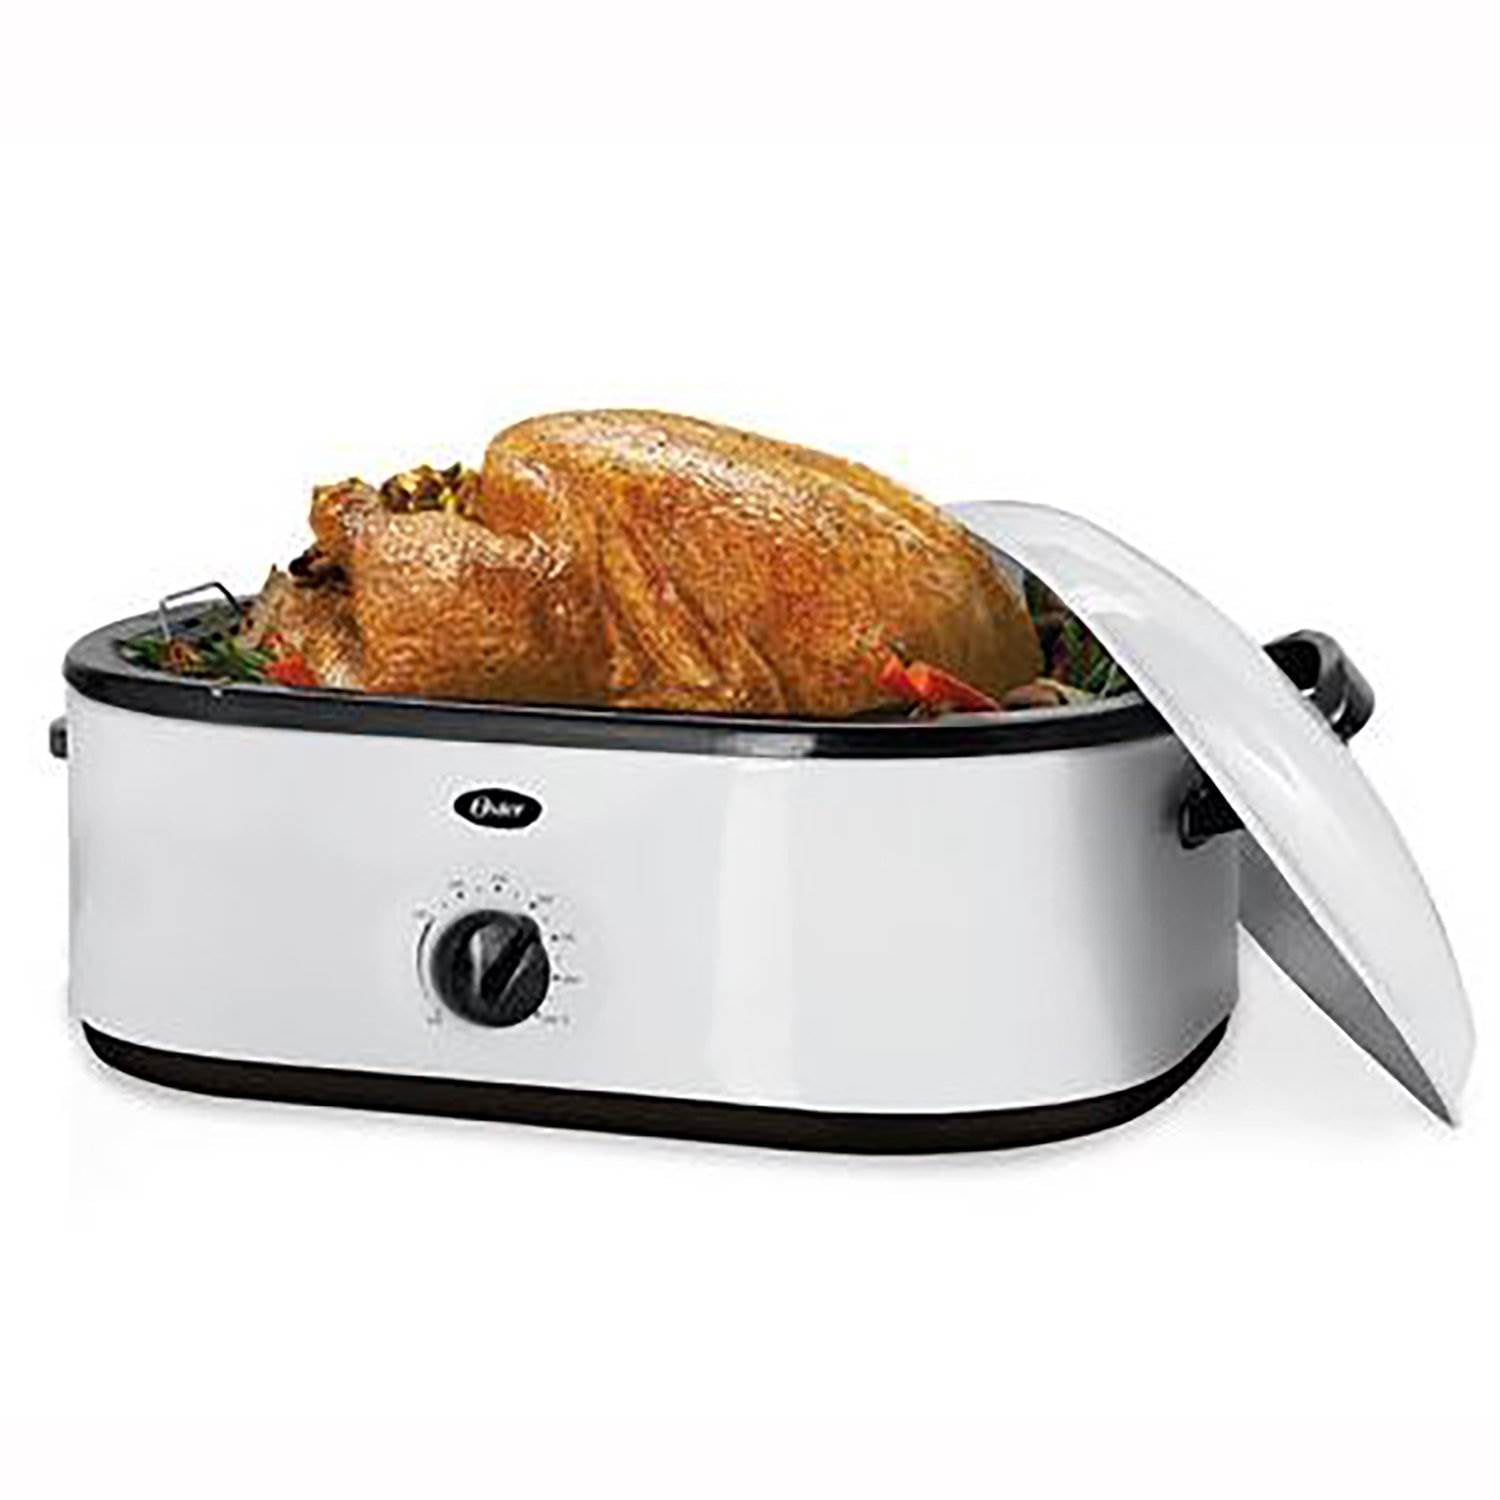 Roaster Oven Slow Cooker 18 Qt Quart WHITE Crockpot Turkey Dinner Extra Large 